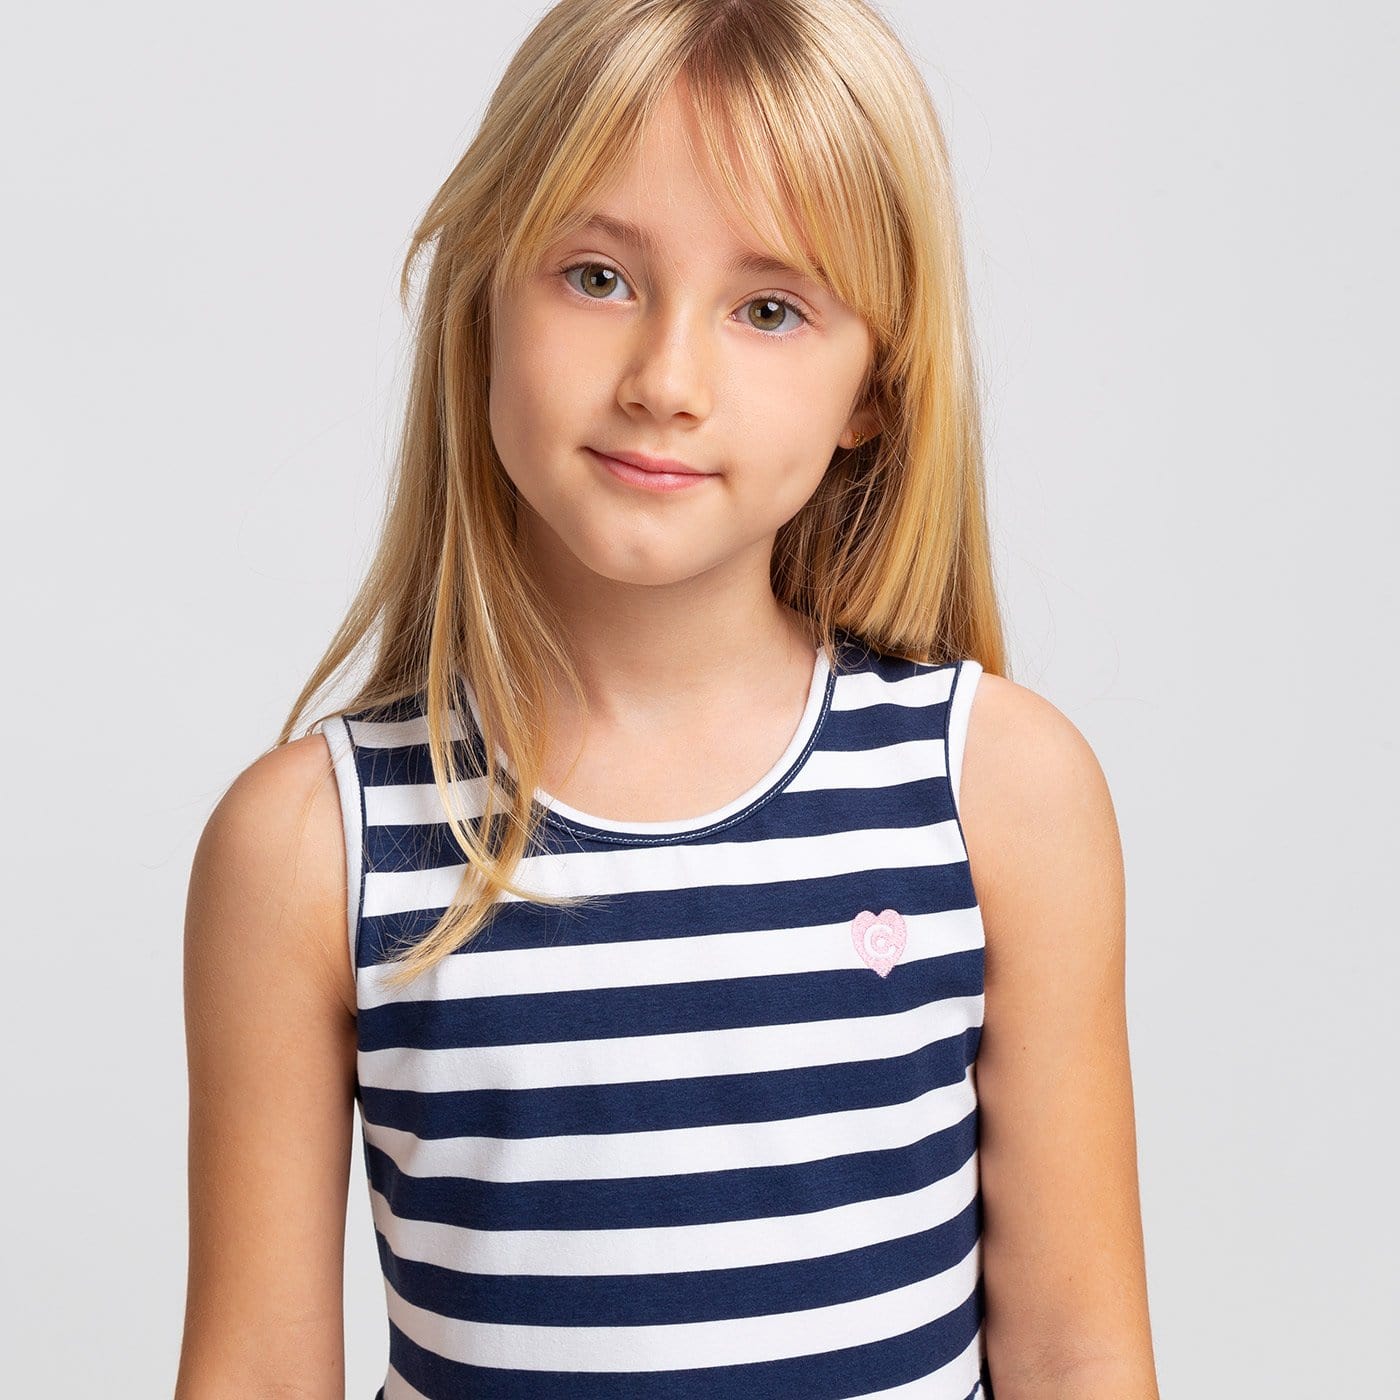 CONGUITOS TEXTIL Clothing Girl's Navy Stripes Skater Dress